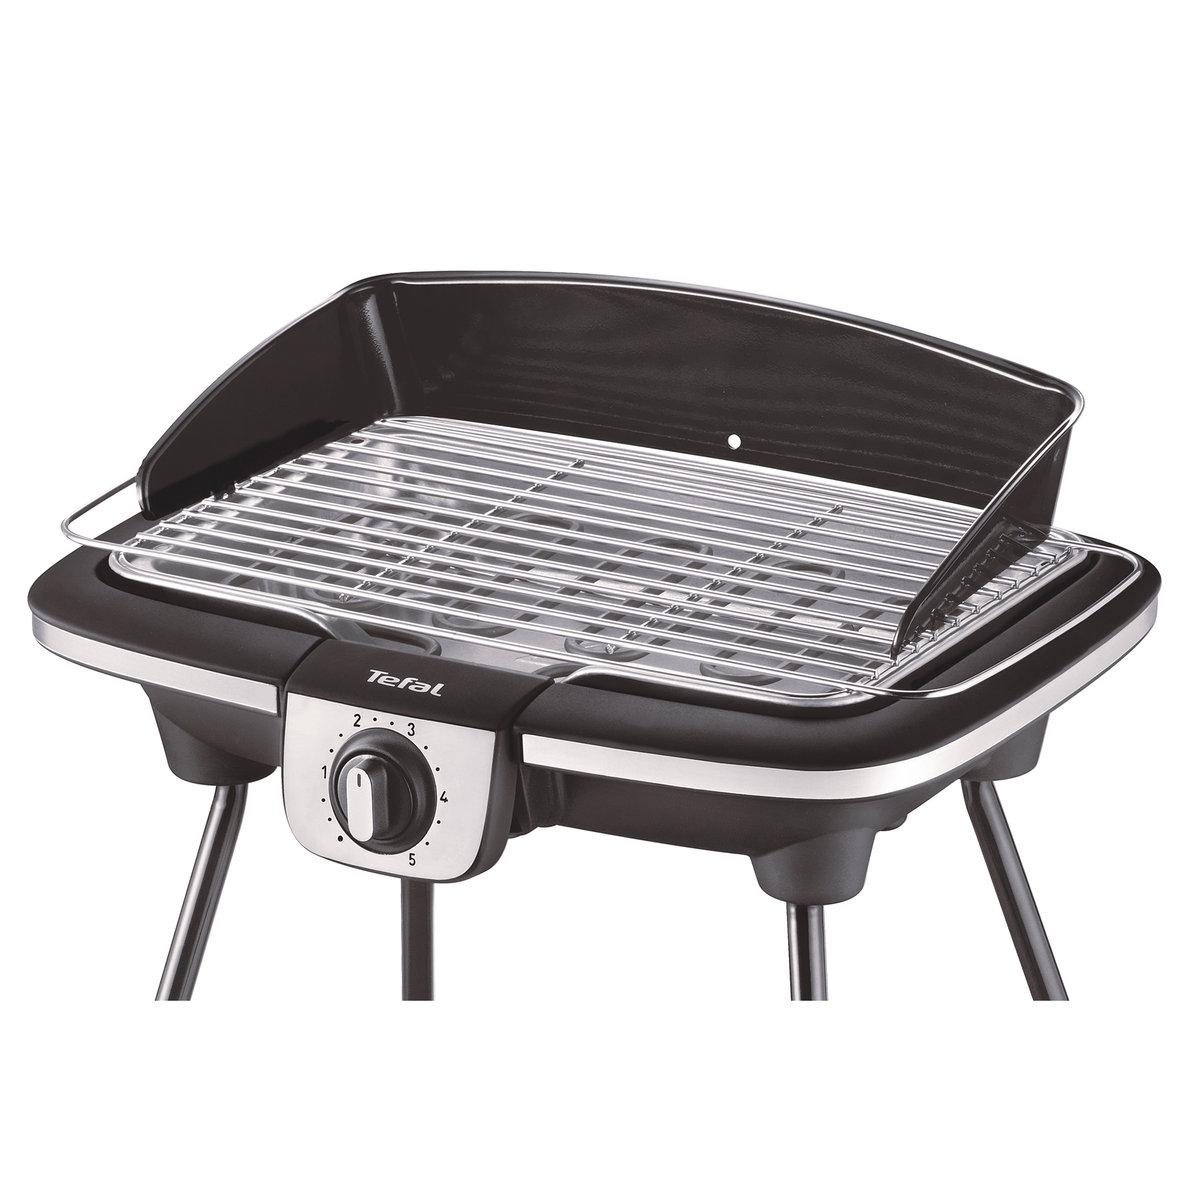 Barbecue électrique easy grill adjust pieds bg902d12 Tefal | La